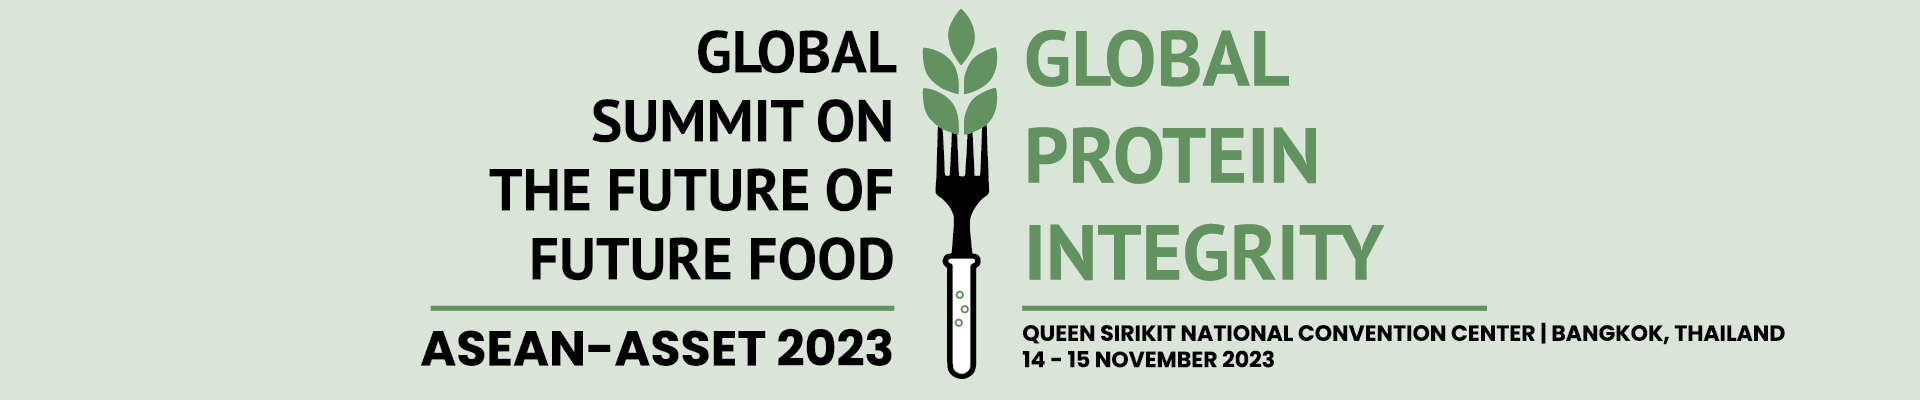 ASEAN-ASSET 2023: Global Summit on the Future of Future food